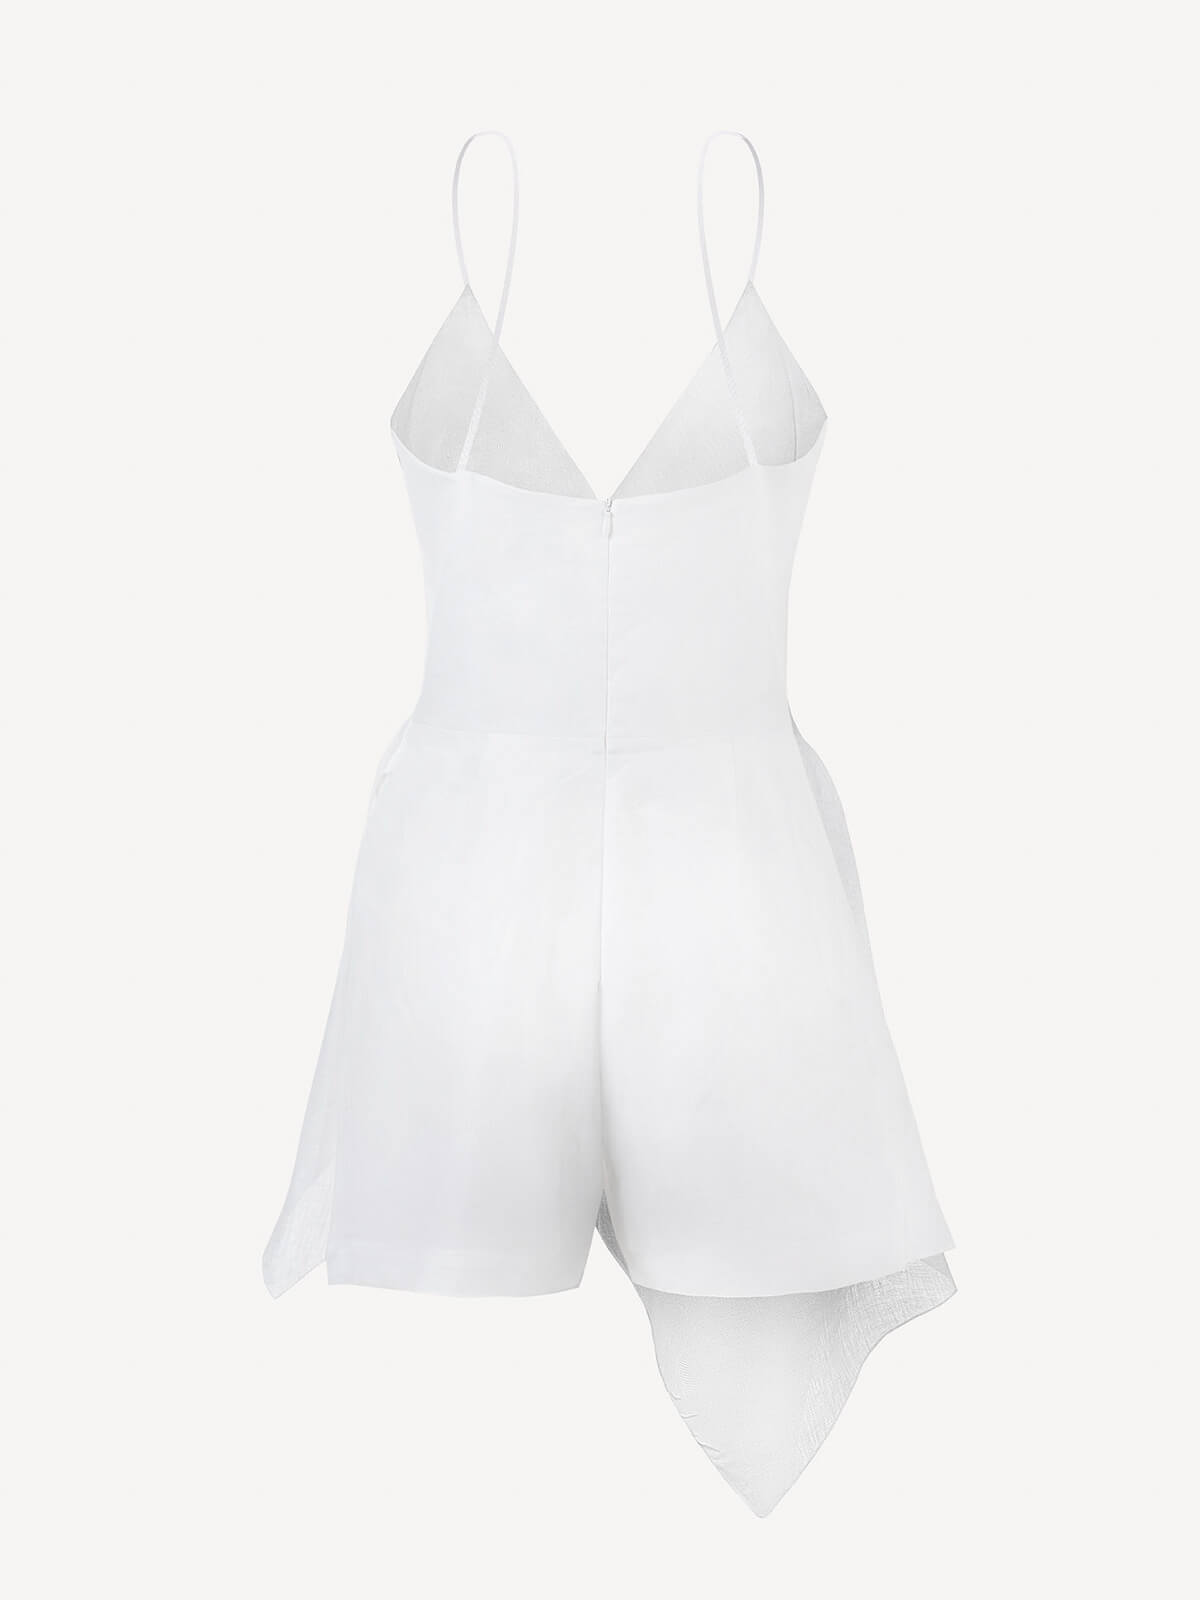 Tuta June 100% Capri white linen jumpsuit back